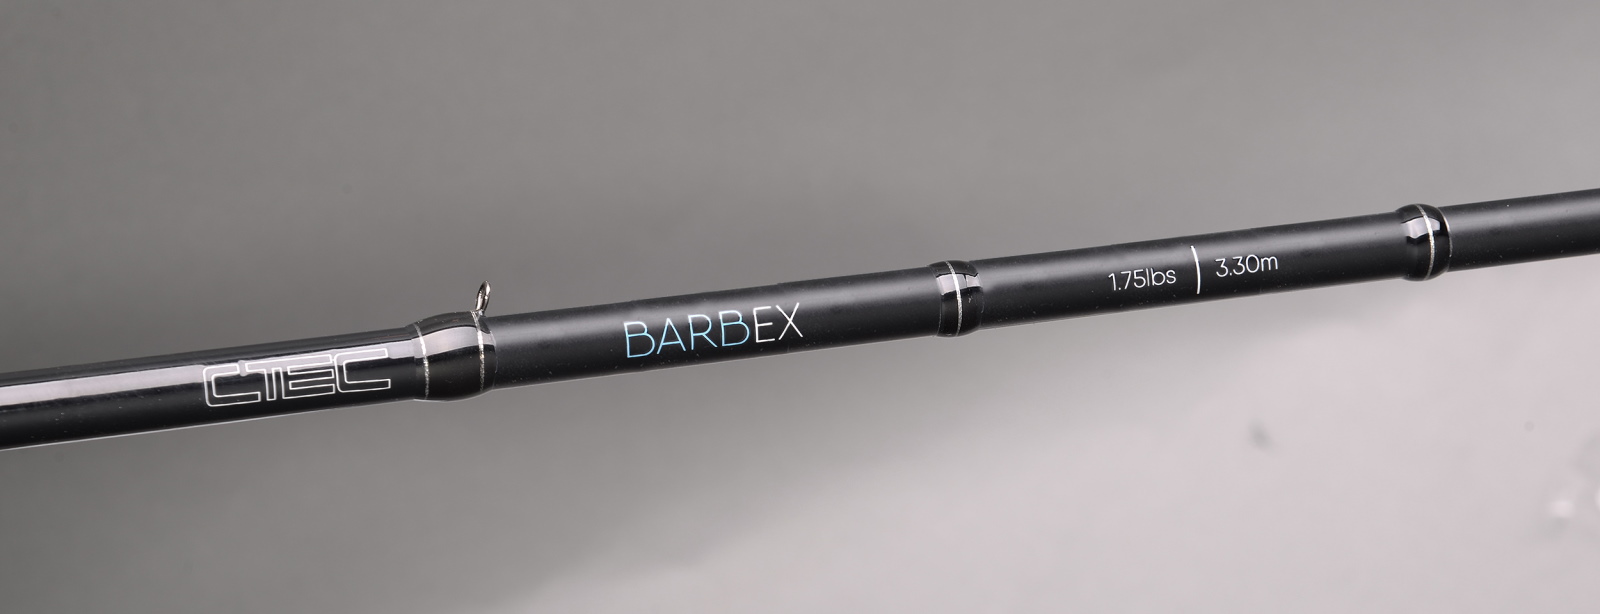 SPRO CTEC Barbex 3,30 m 1,75 lbs